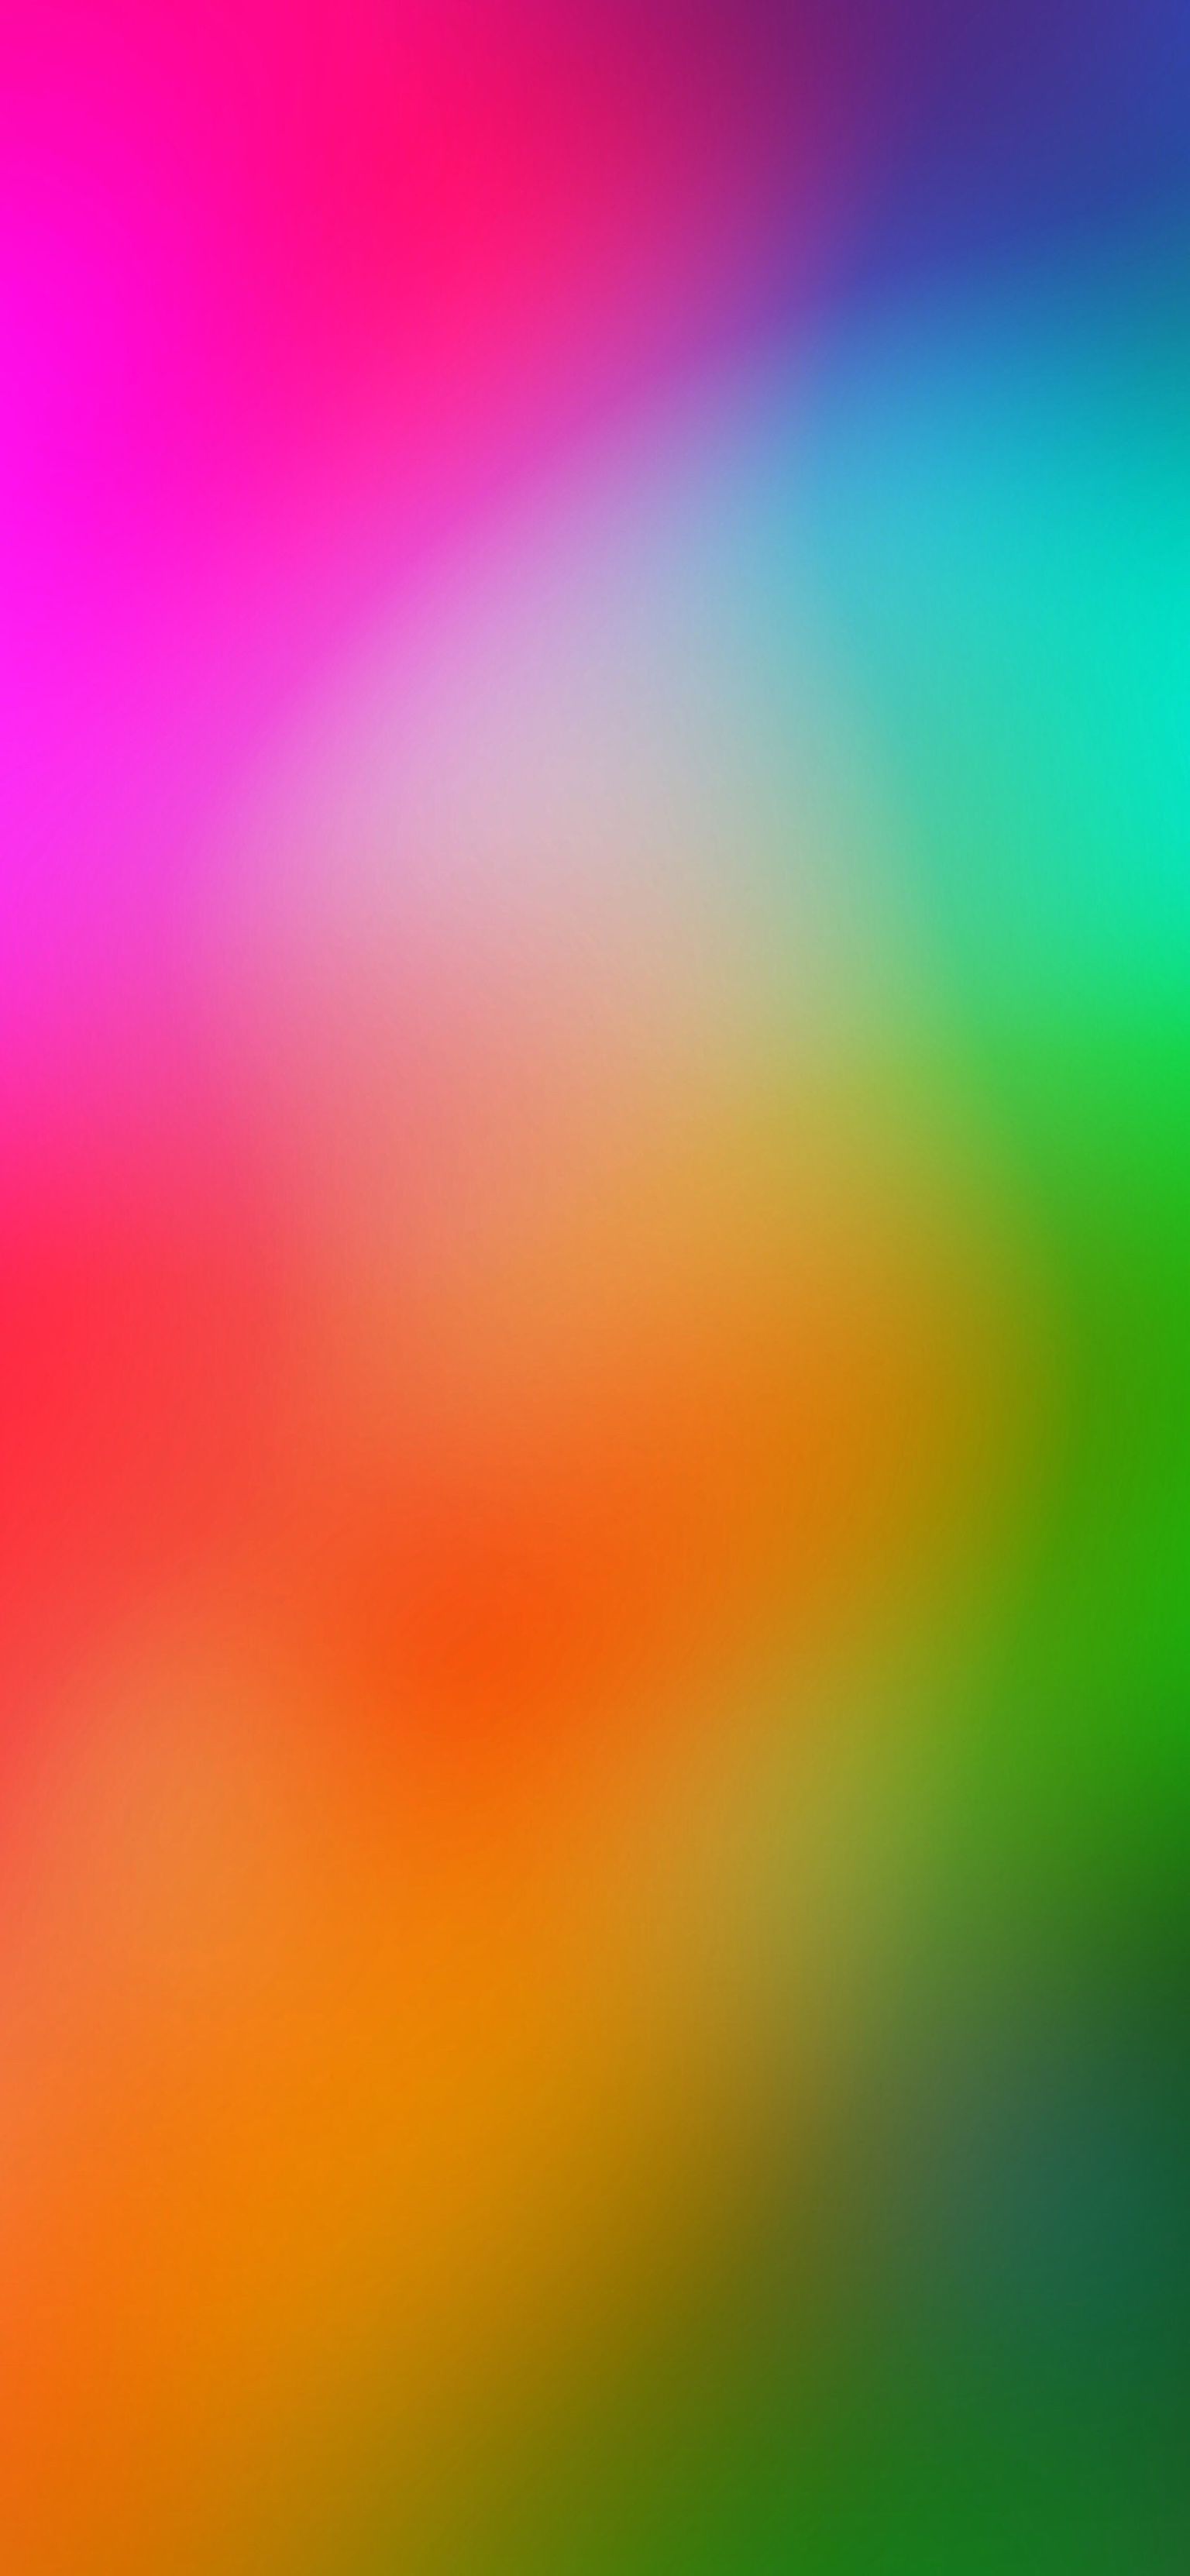 Iphone Colorful Wallpaper 4k - 1536x3324 Wallpaper 